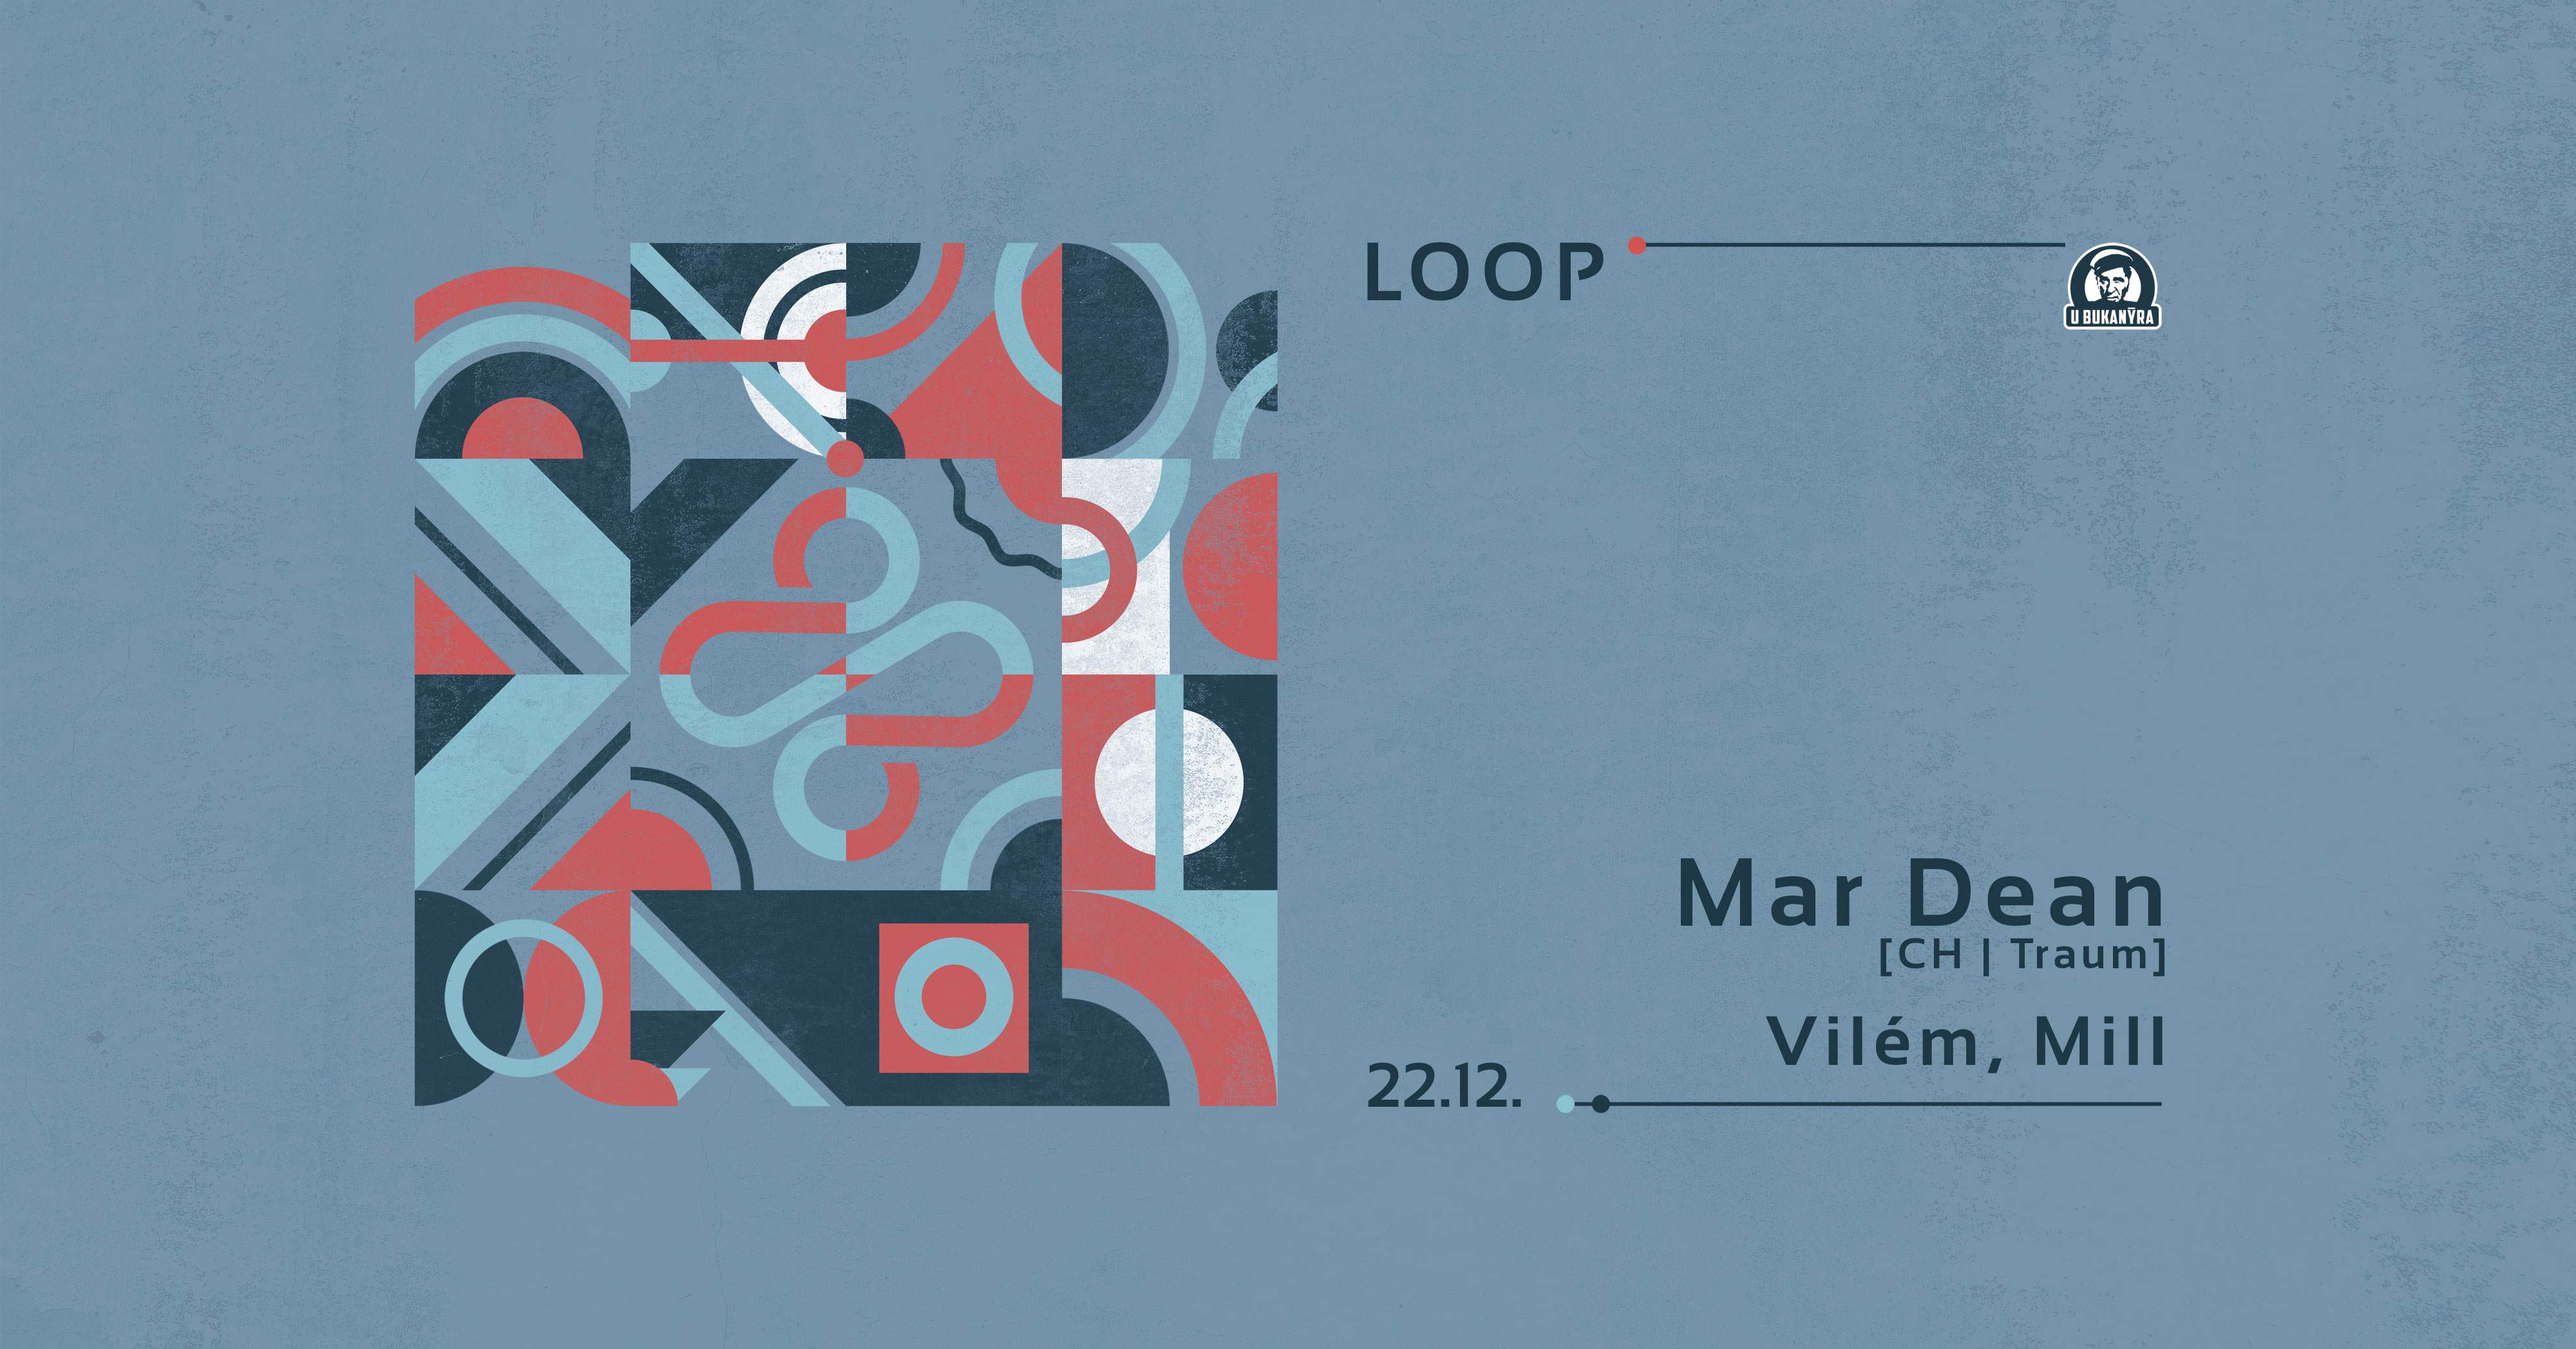 LOOP - djs Mar Dean, /CH, Heinz Music/ Vilém, Mill - フライヤー表